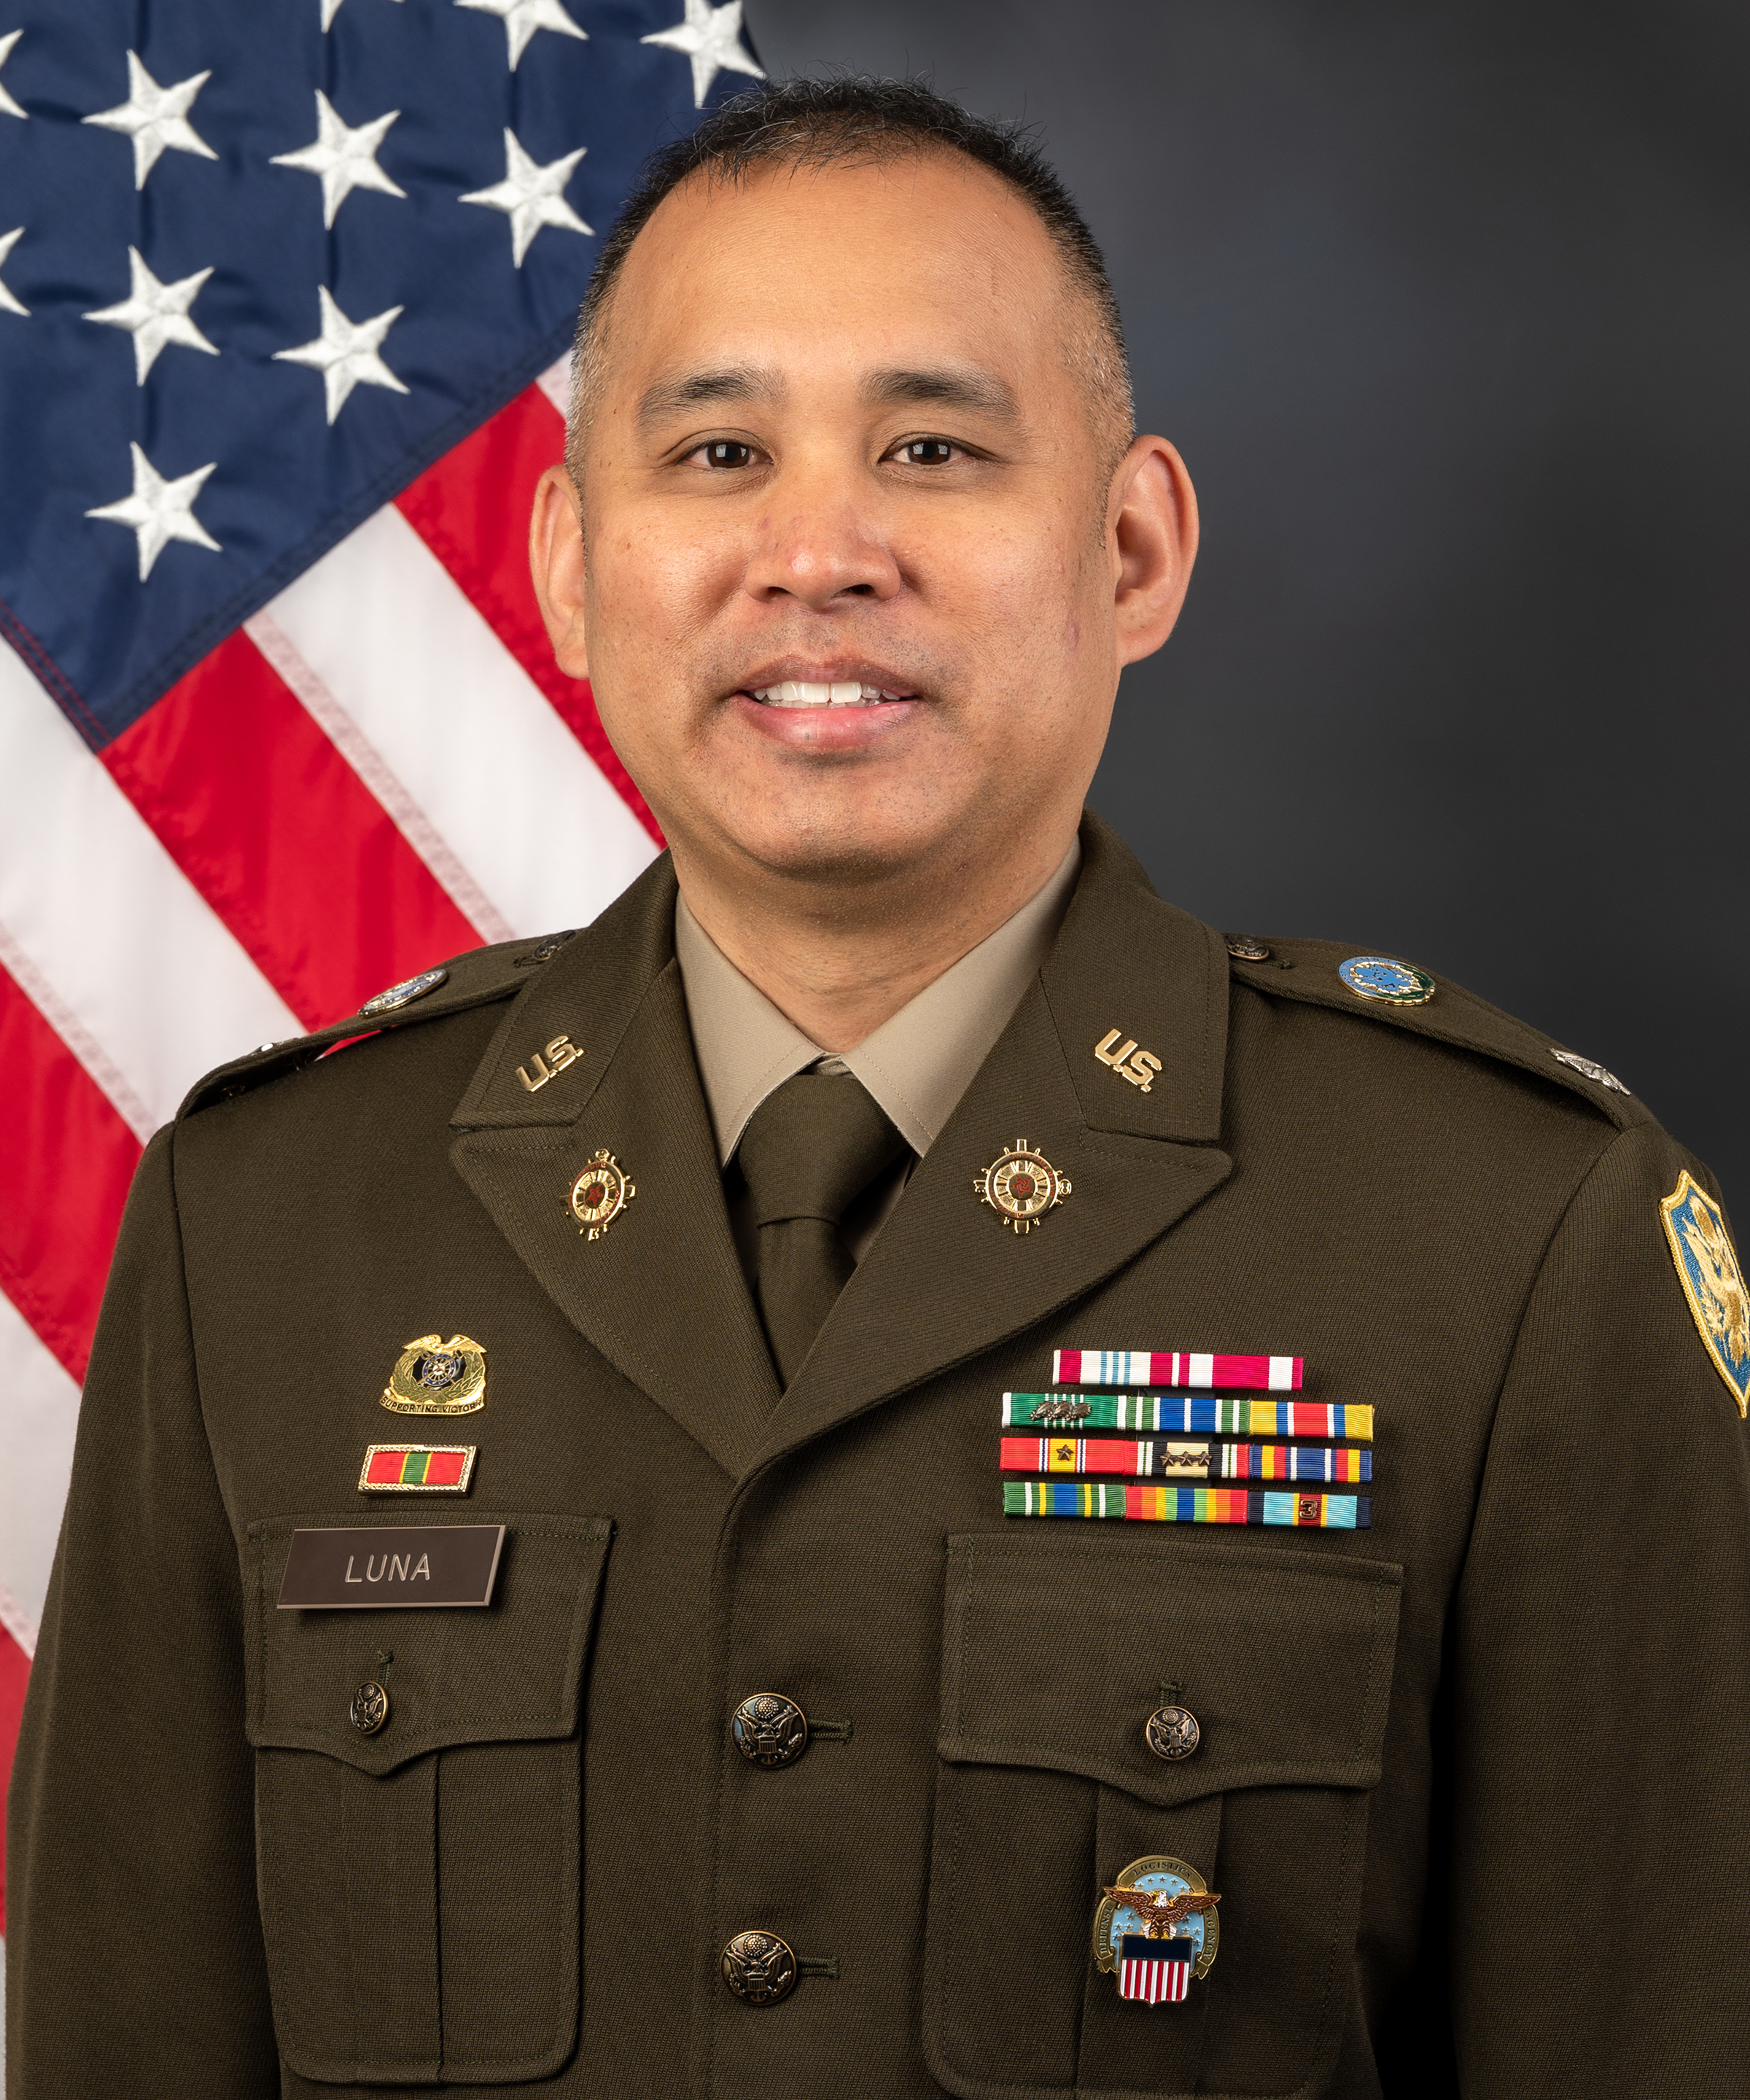 Allen J. Luna, LTC, USA, Commander